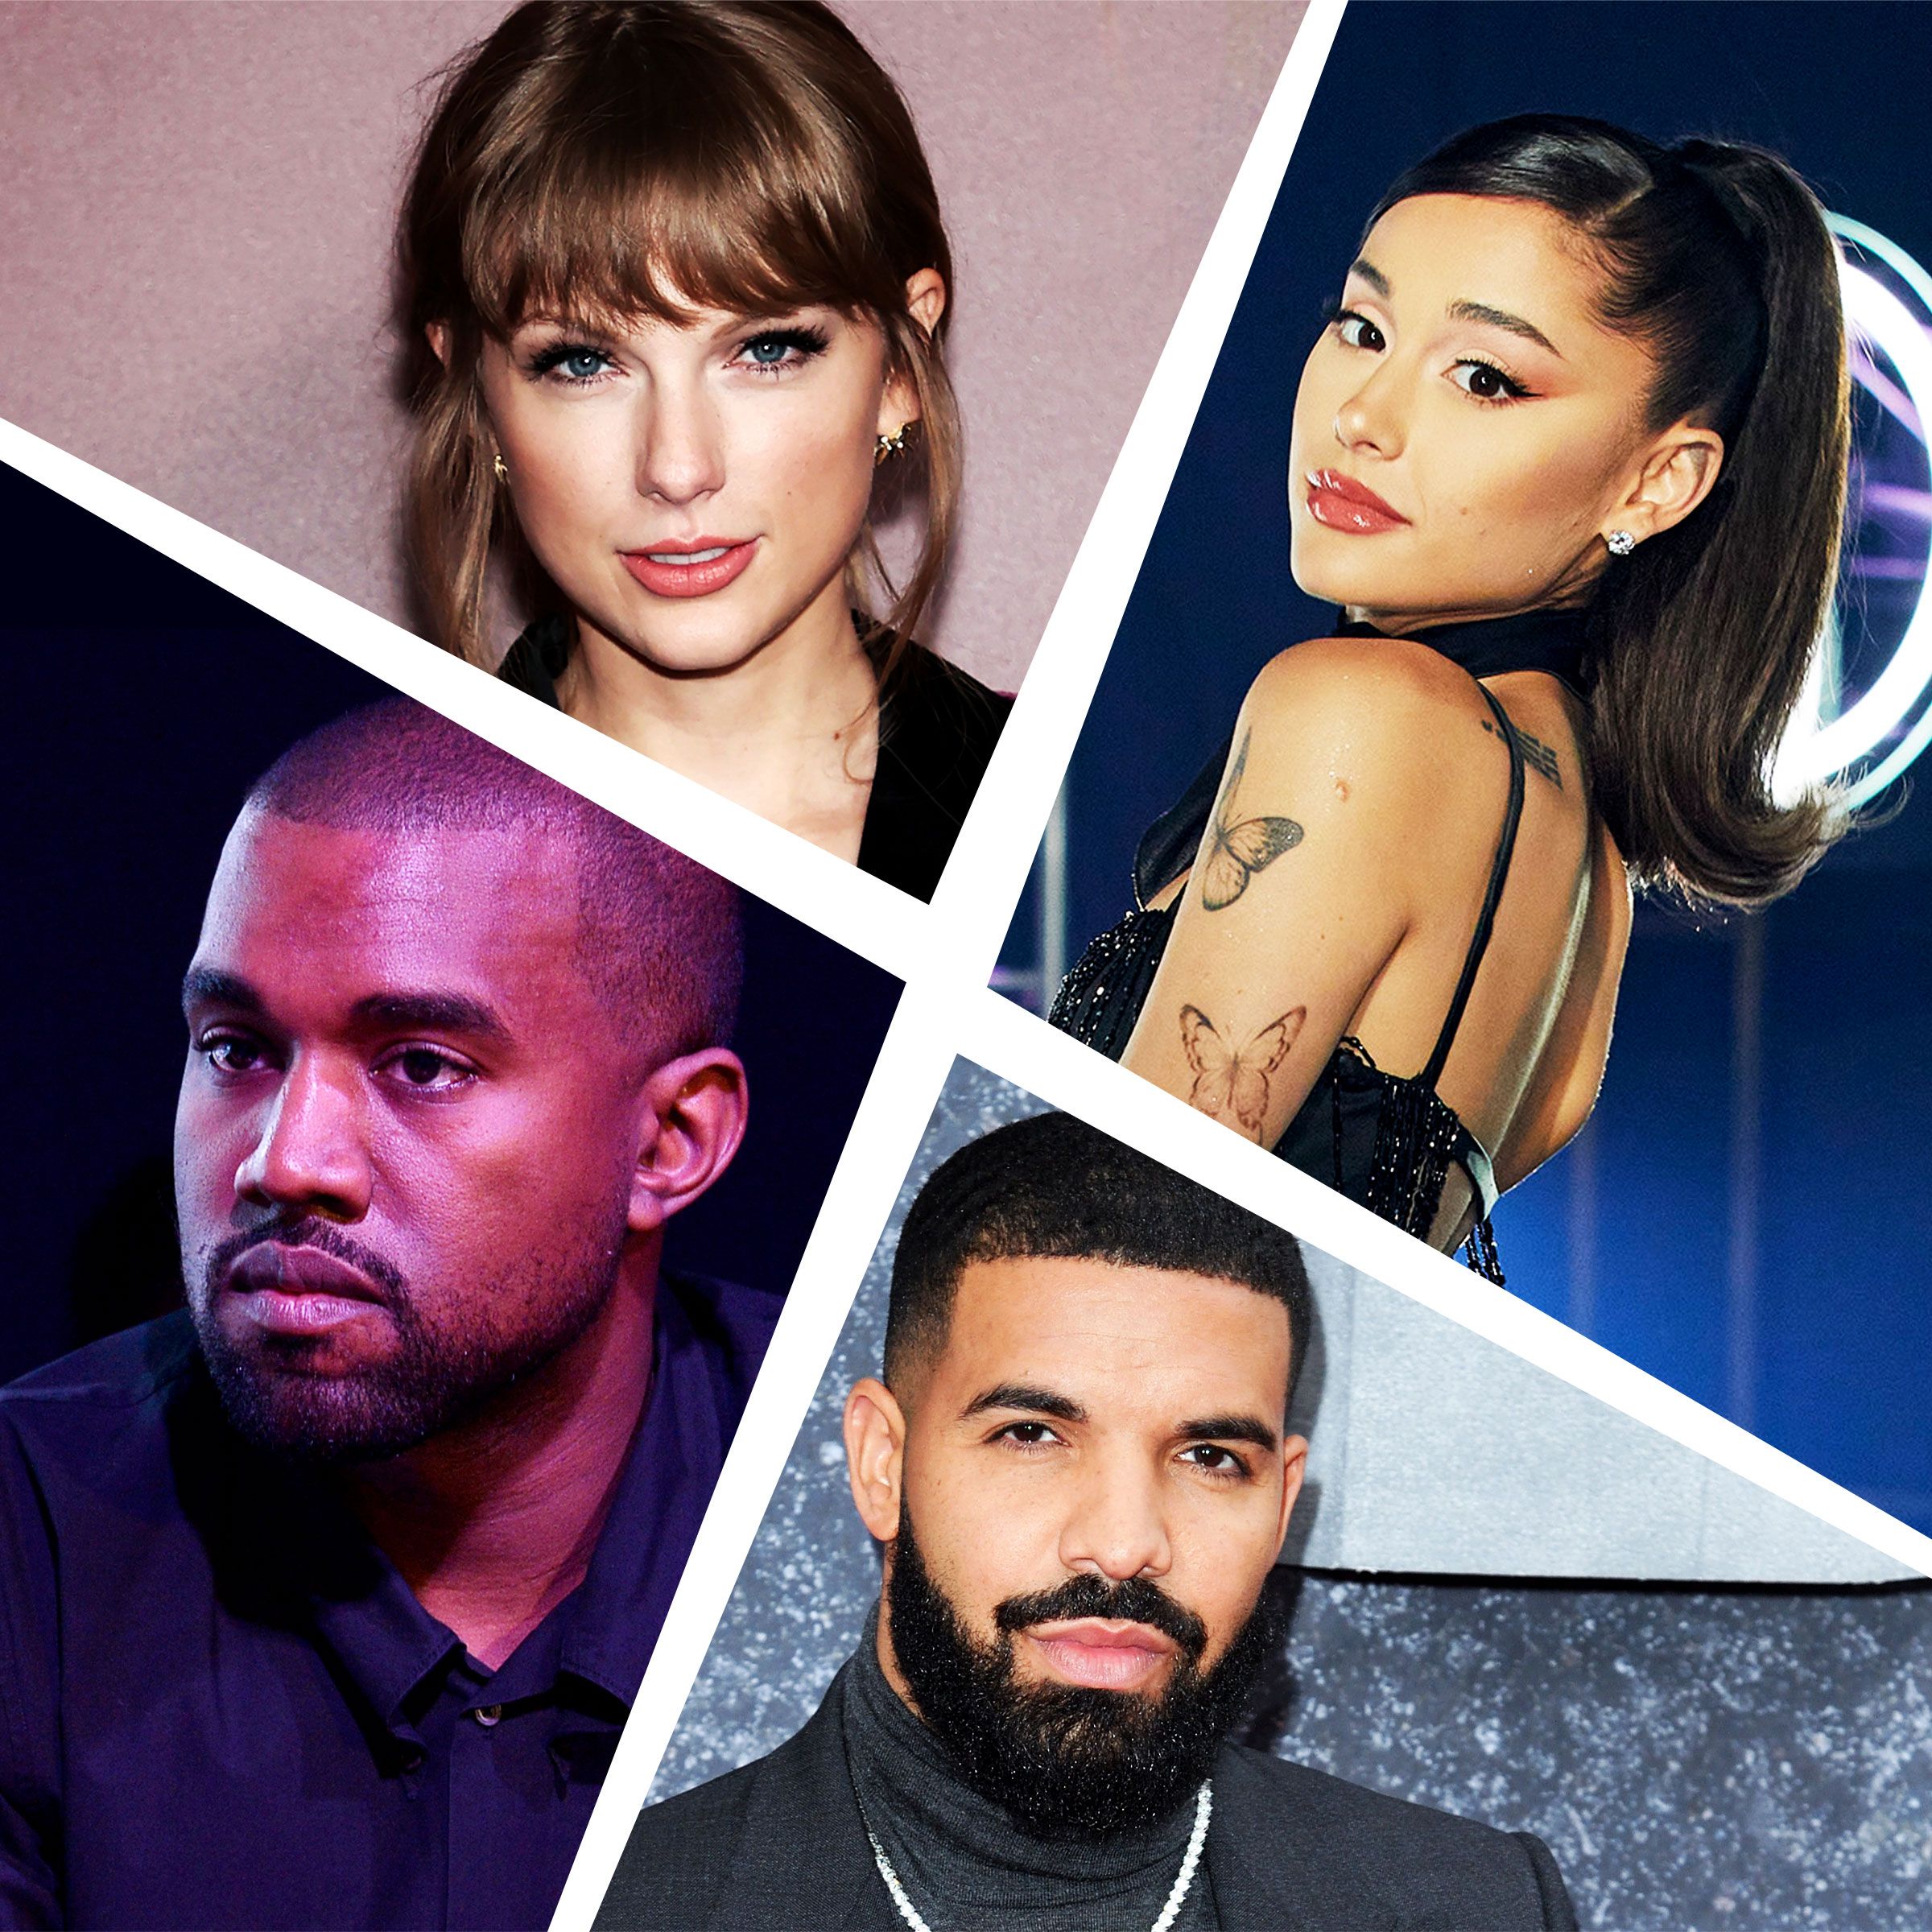 Ariana Grande Selena Gomez Sex - Why Aren't Ariana Grande, Taylor Swift at the 2022 Grammys